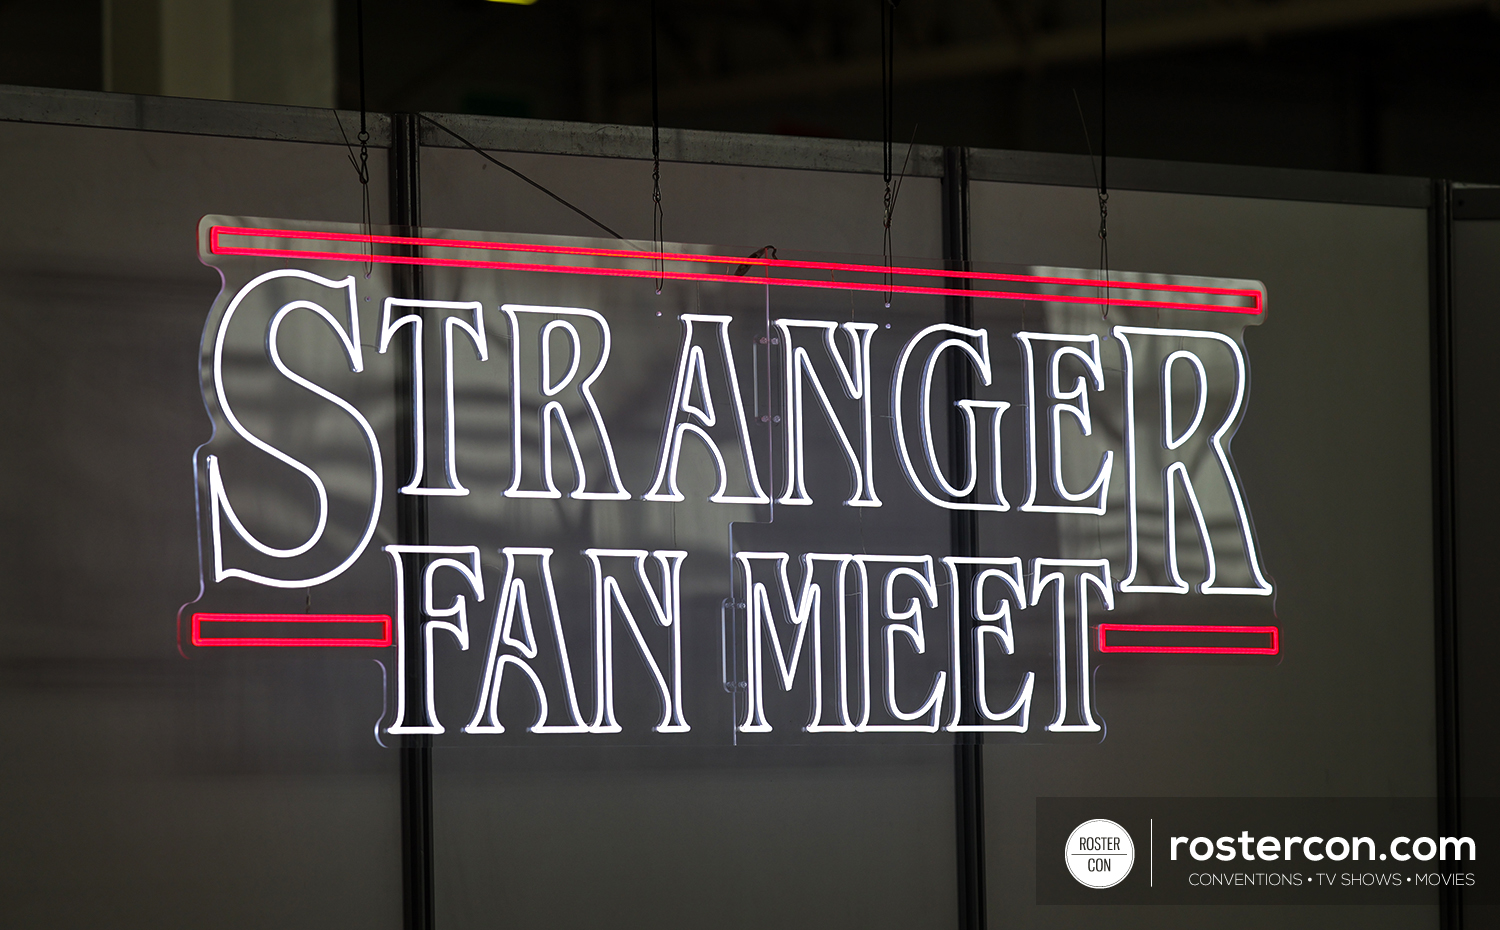 Stranger Fan Meet: Limited Edition – Stranger Things